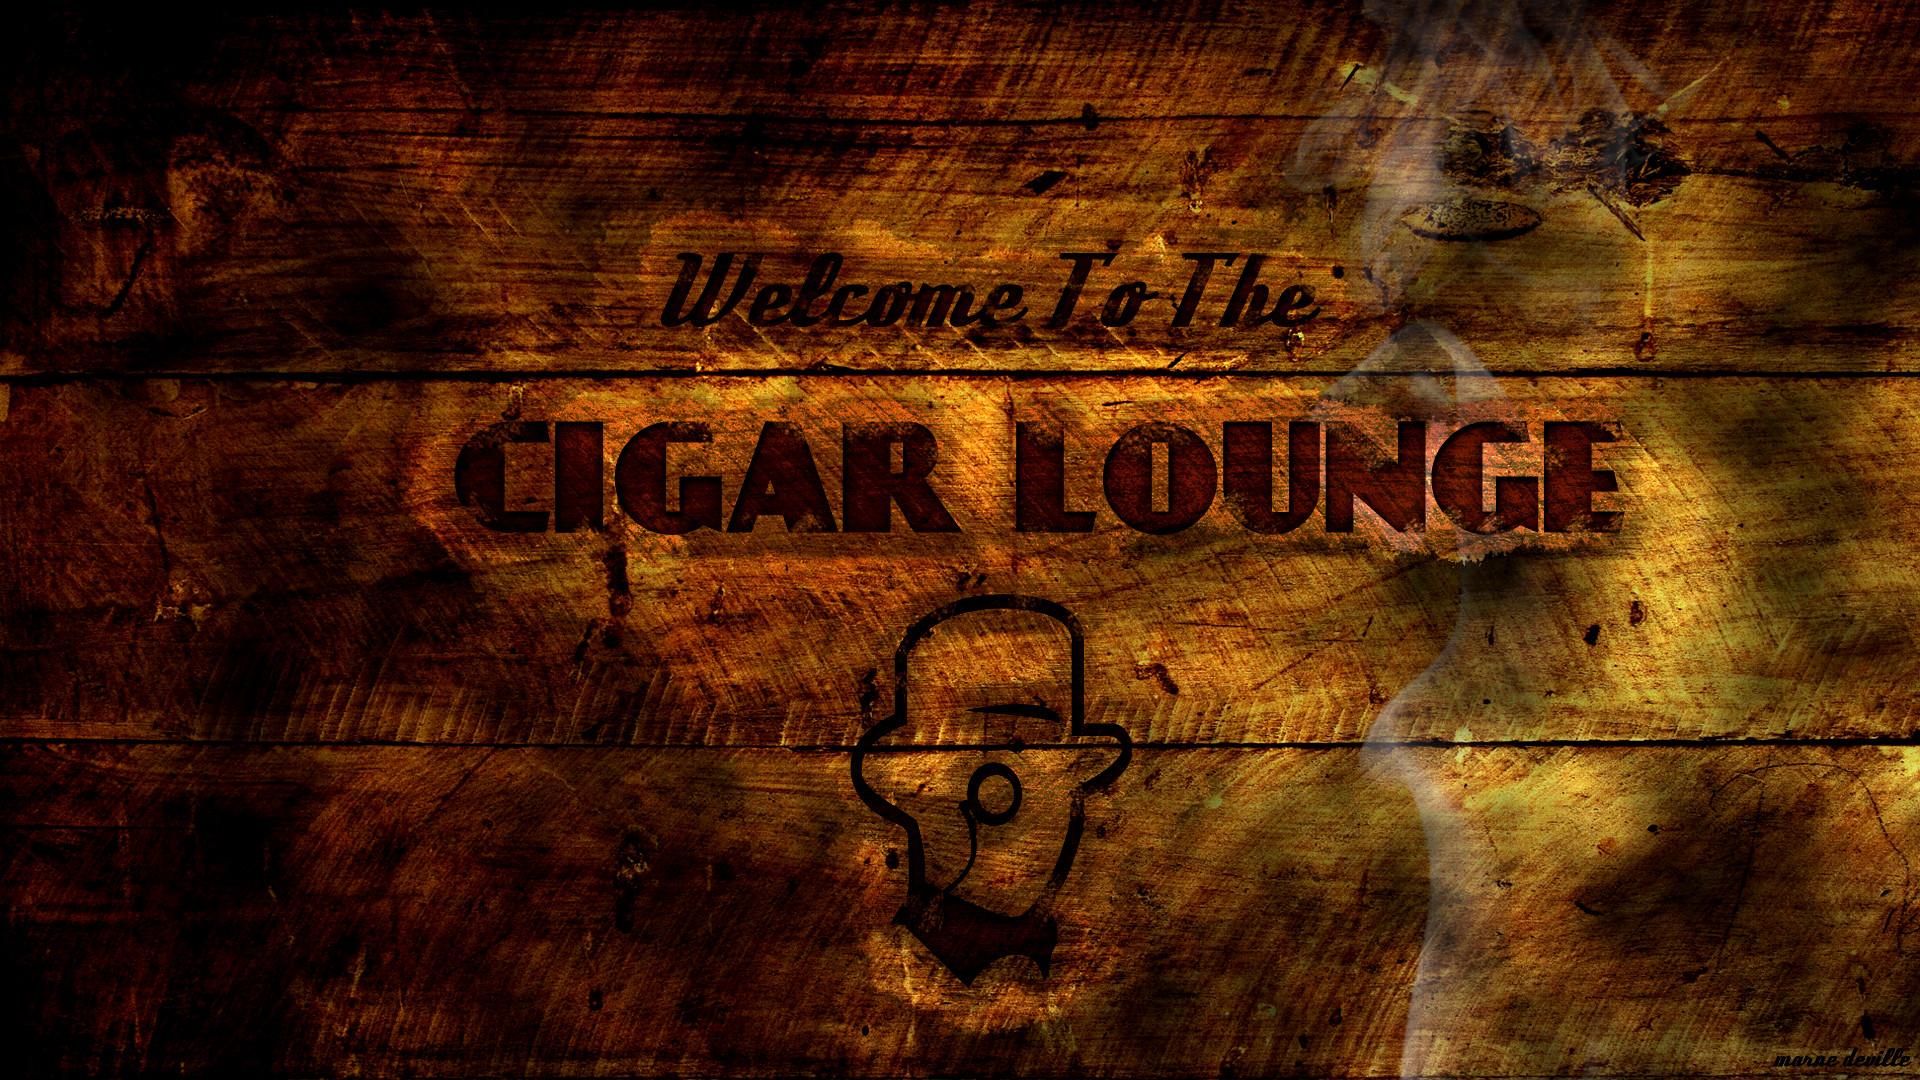 1920x1080 gents-wallpaper-cigar-lounge1